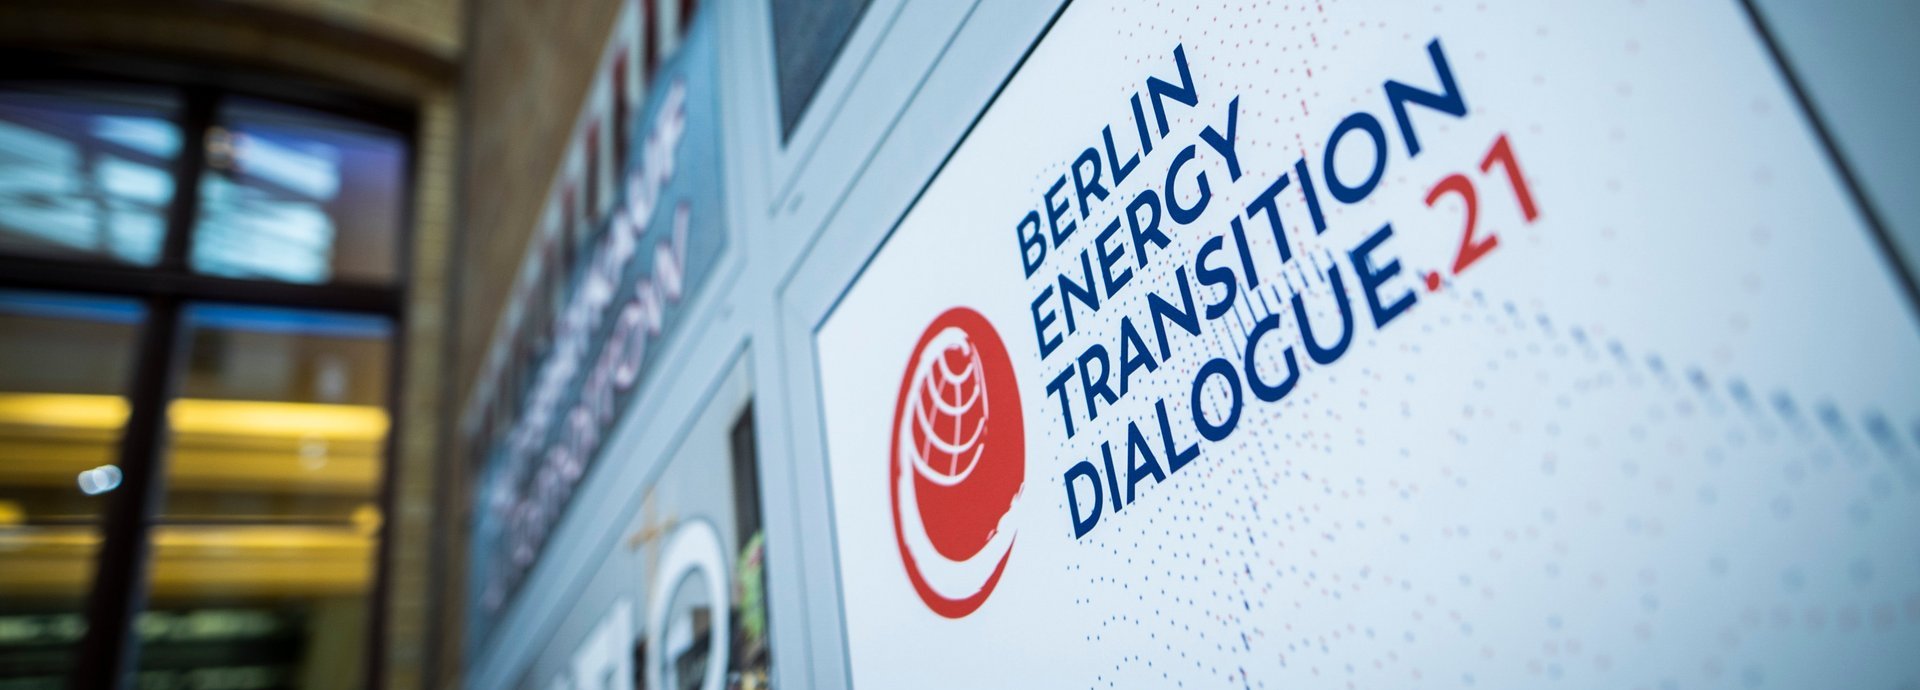 Nahaufnahme des Logo des Berlin Energy Transition Dialogue 2021 an einer Wand